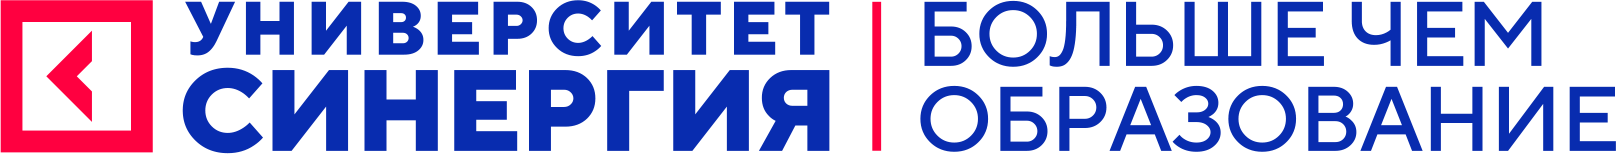 sinergia logo